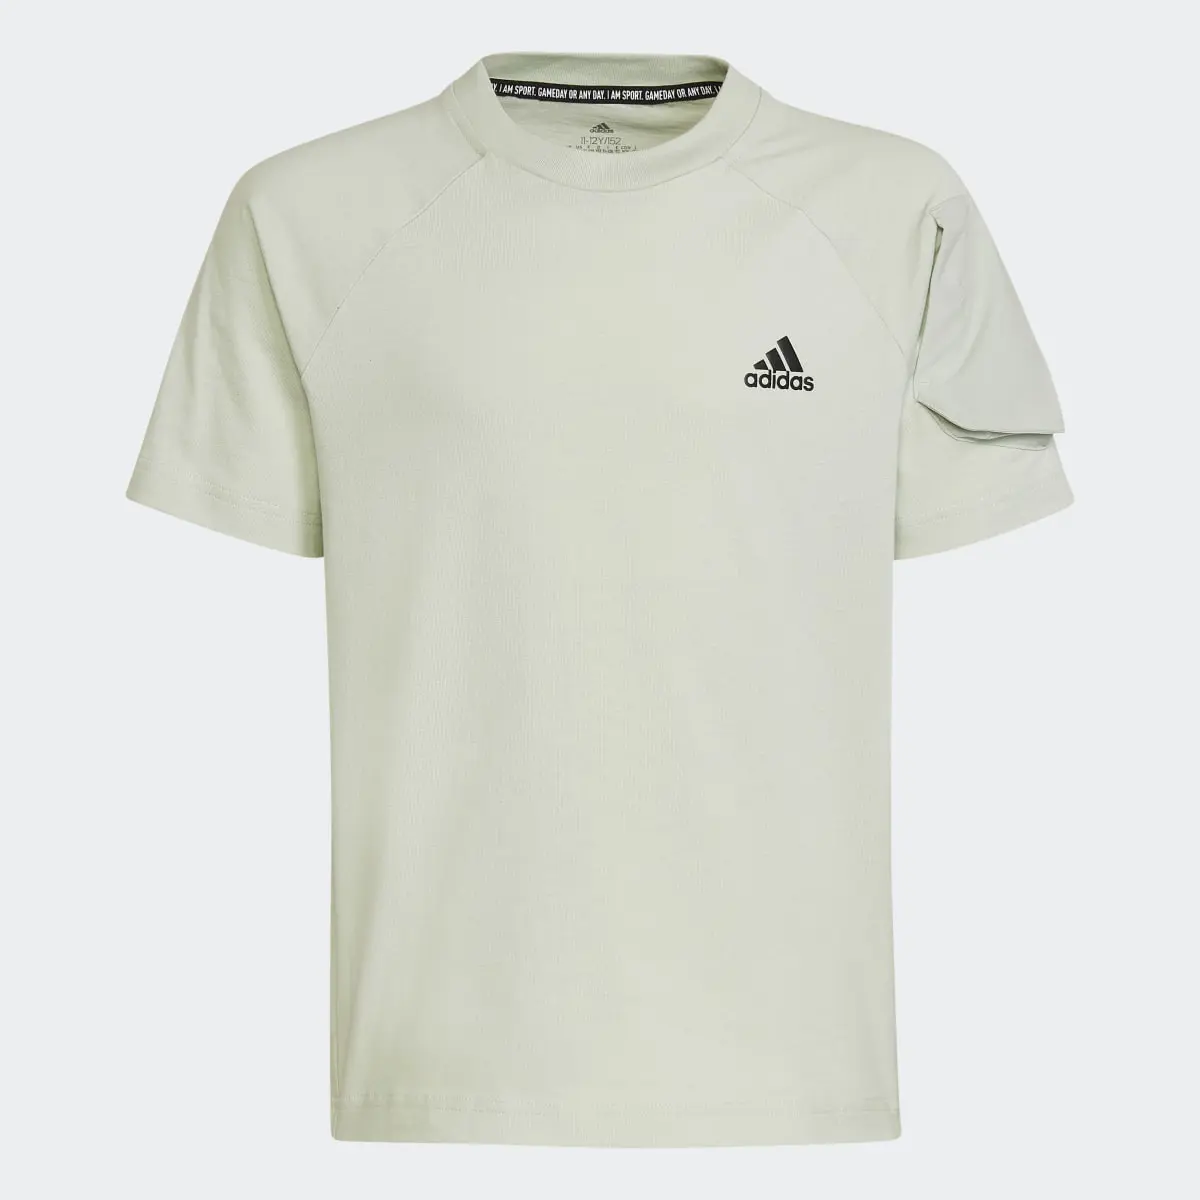 Adidas T-shirt Designed for Gameday. 1